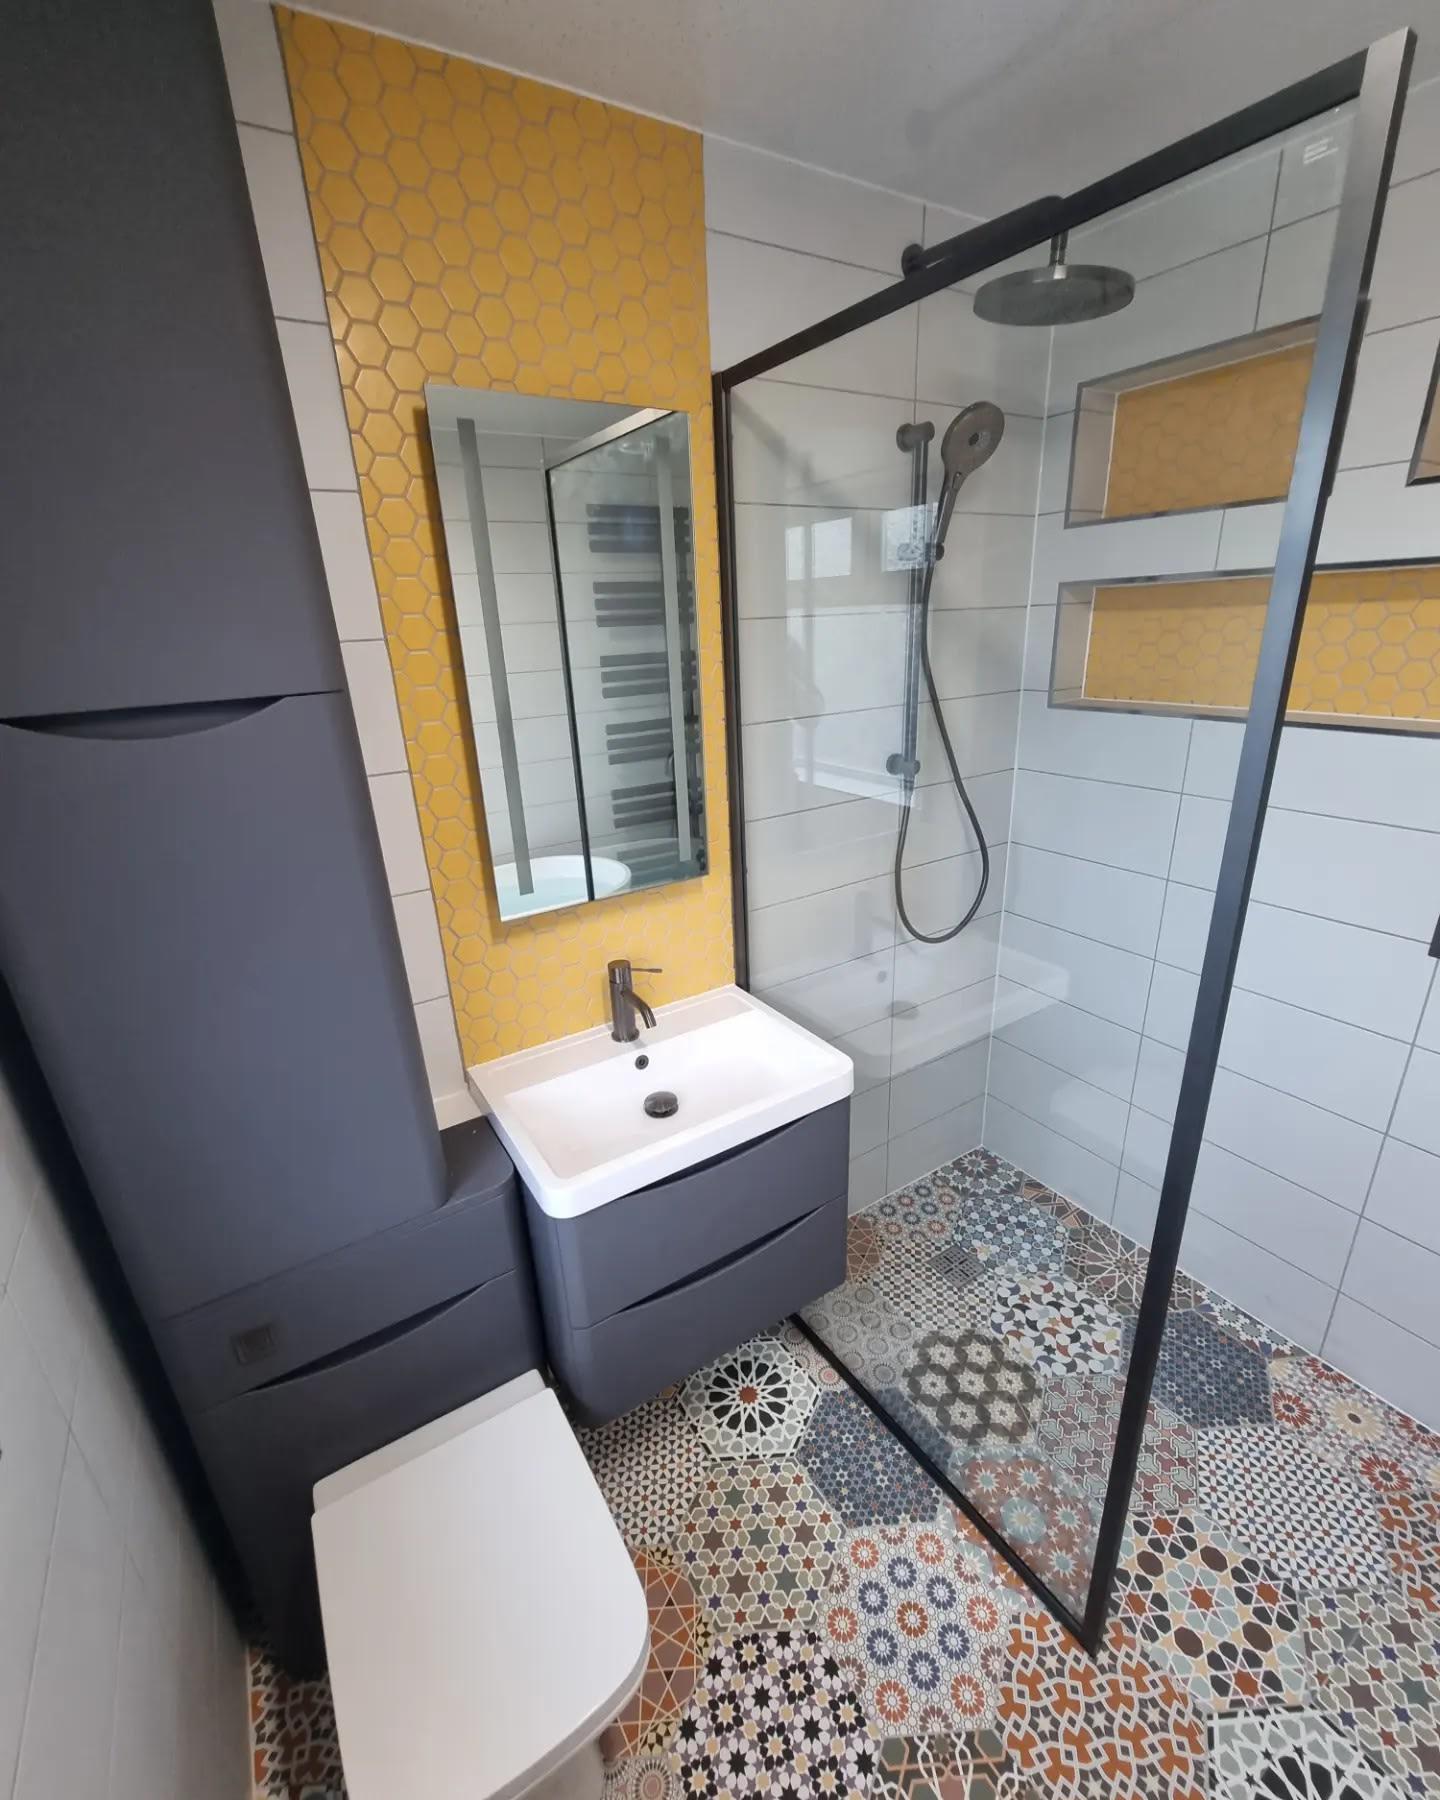 Images LG Bathrooms